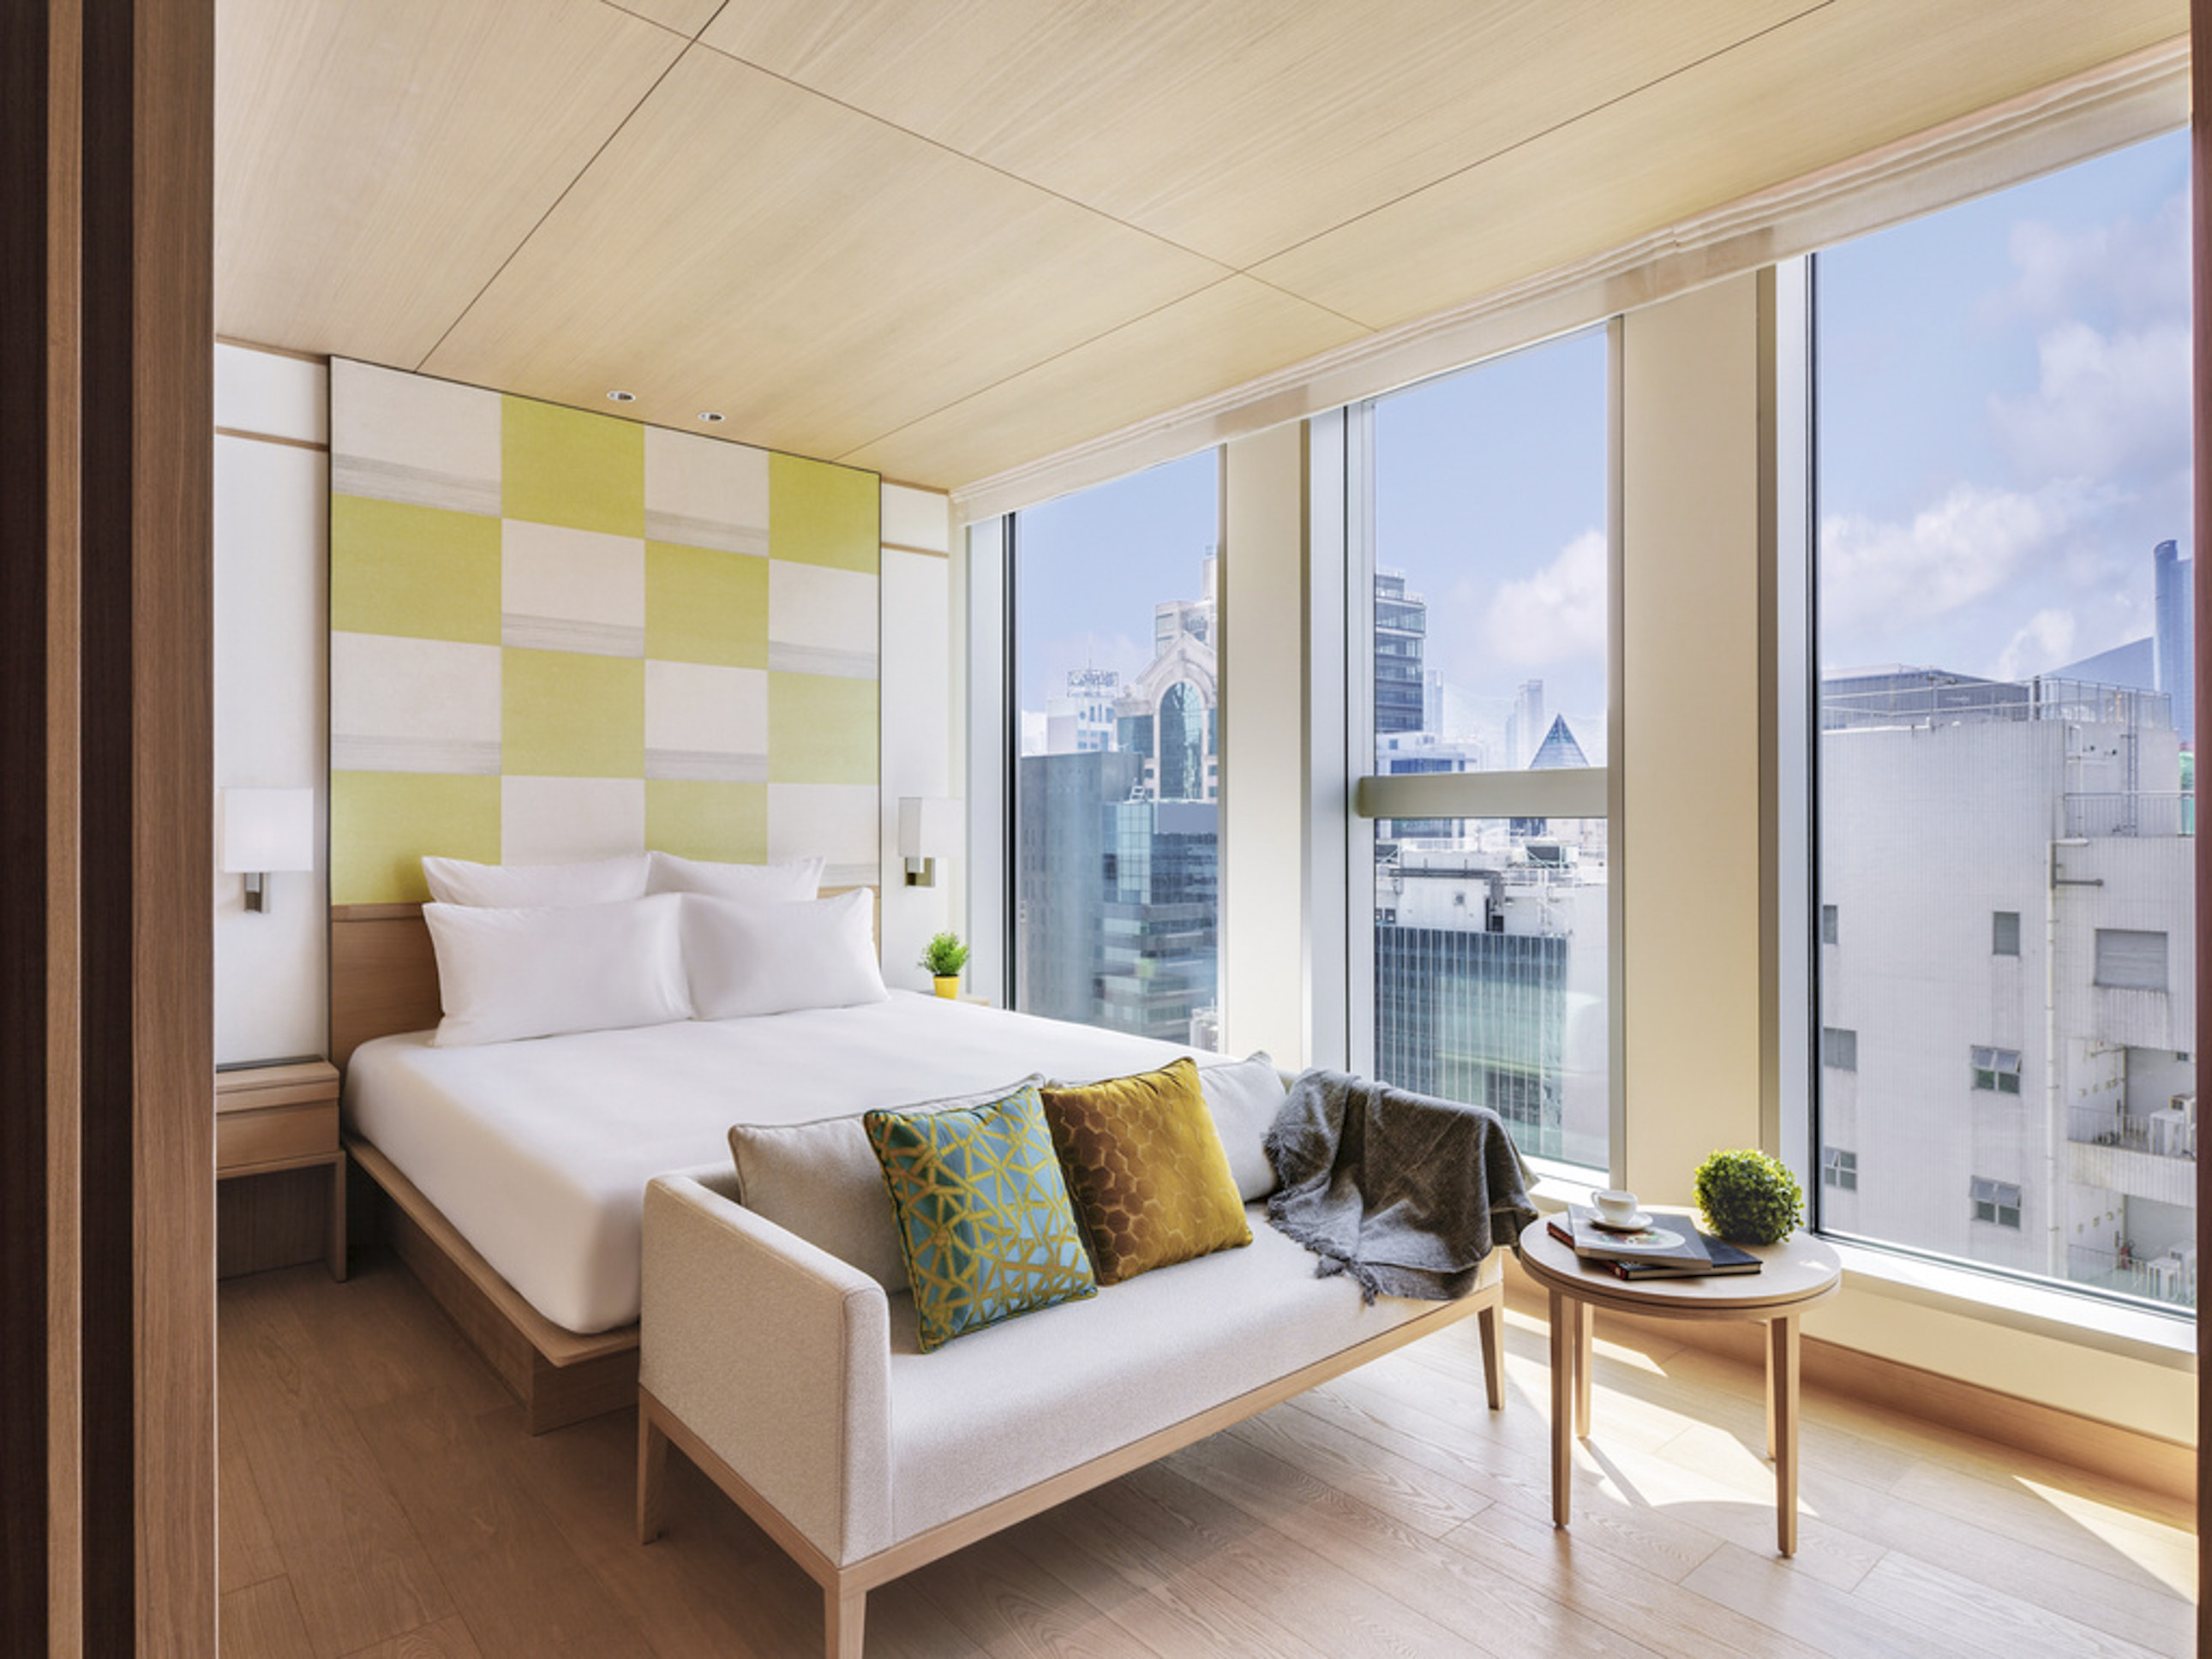 Two new MGallery hotels, at the AKI Hong Kong (pictured) and The Silveri Hong Kong, offer staycation options this summer. Photo: AKI Hong Kong